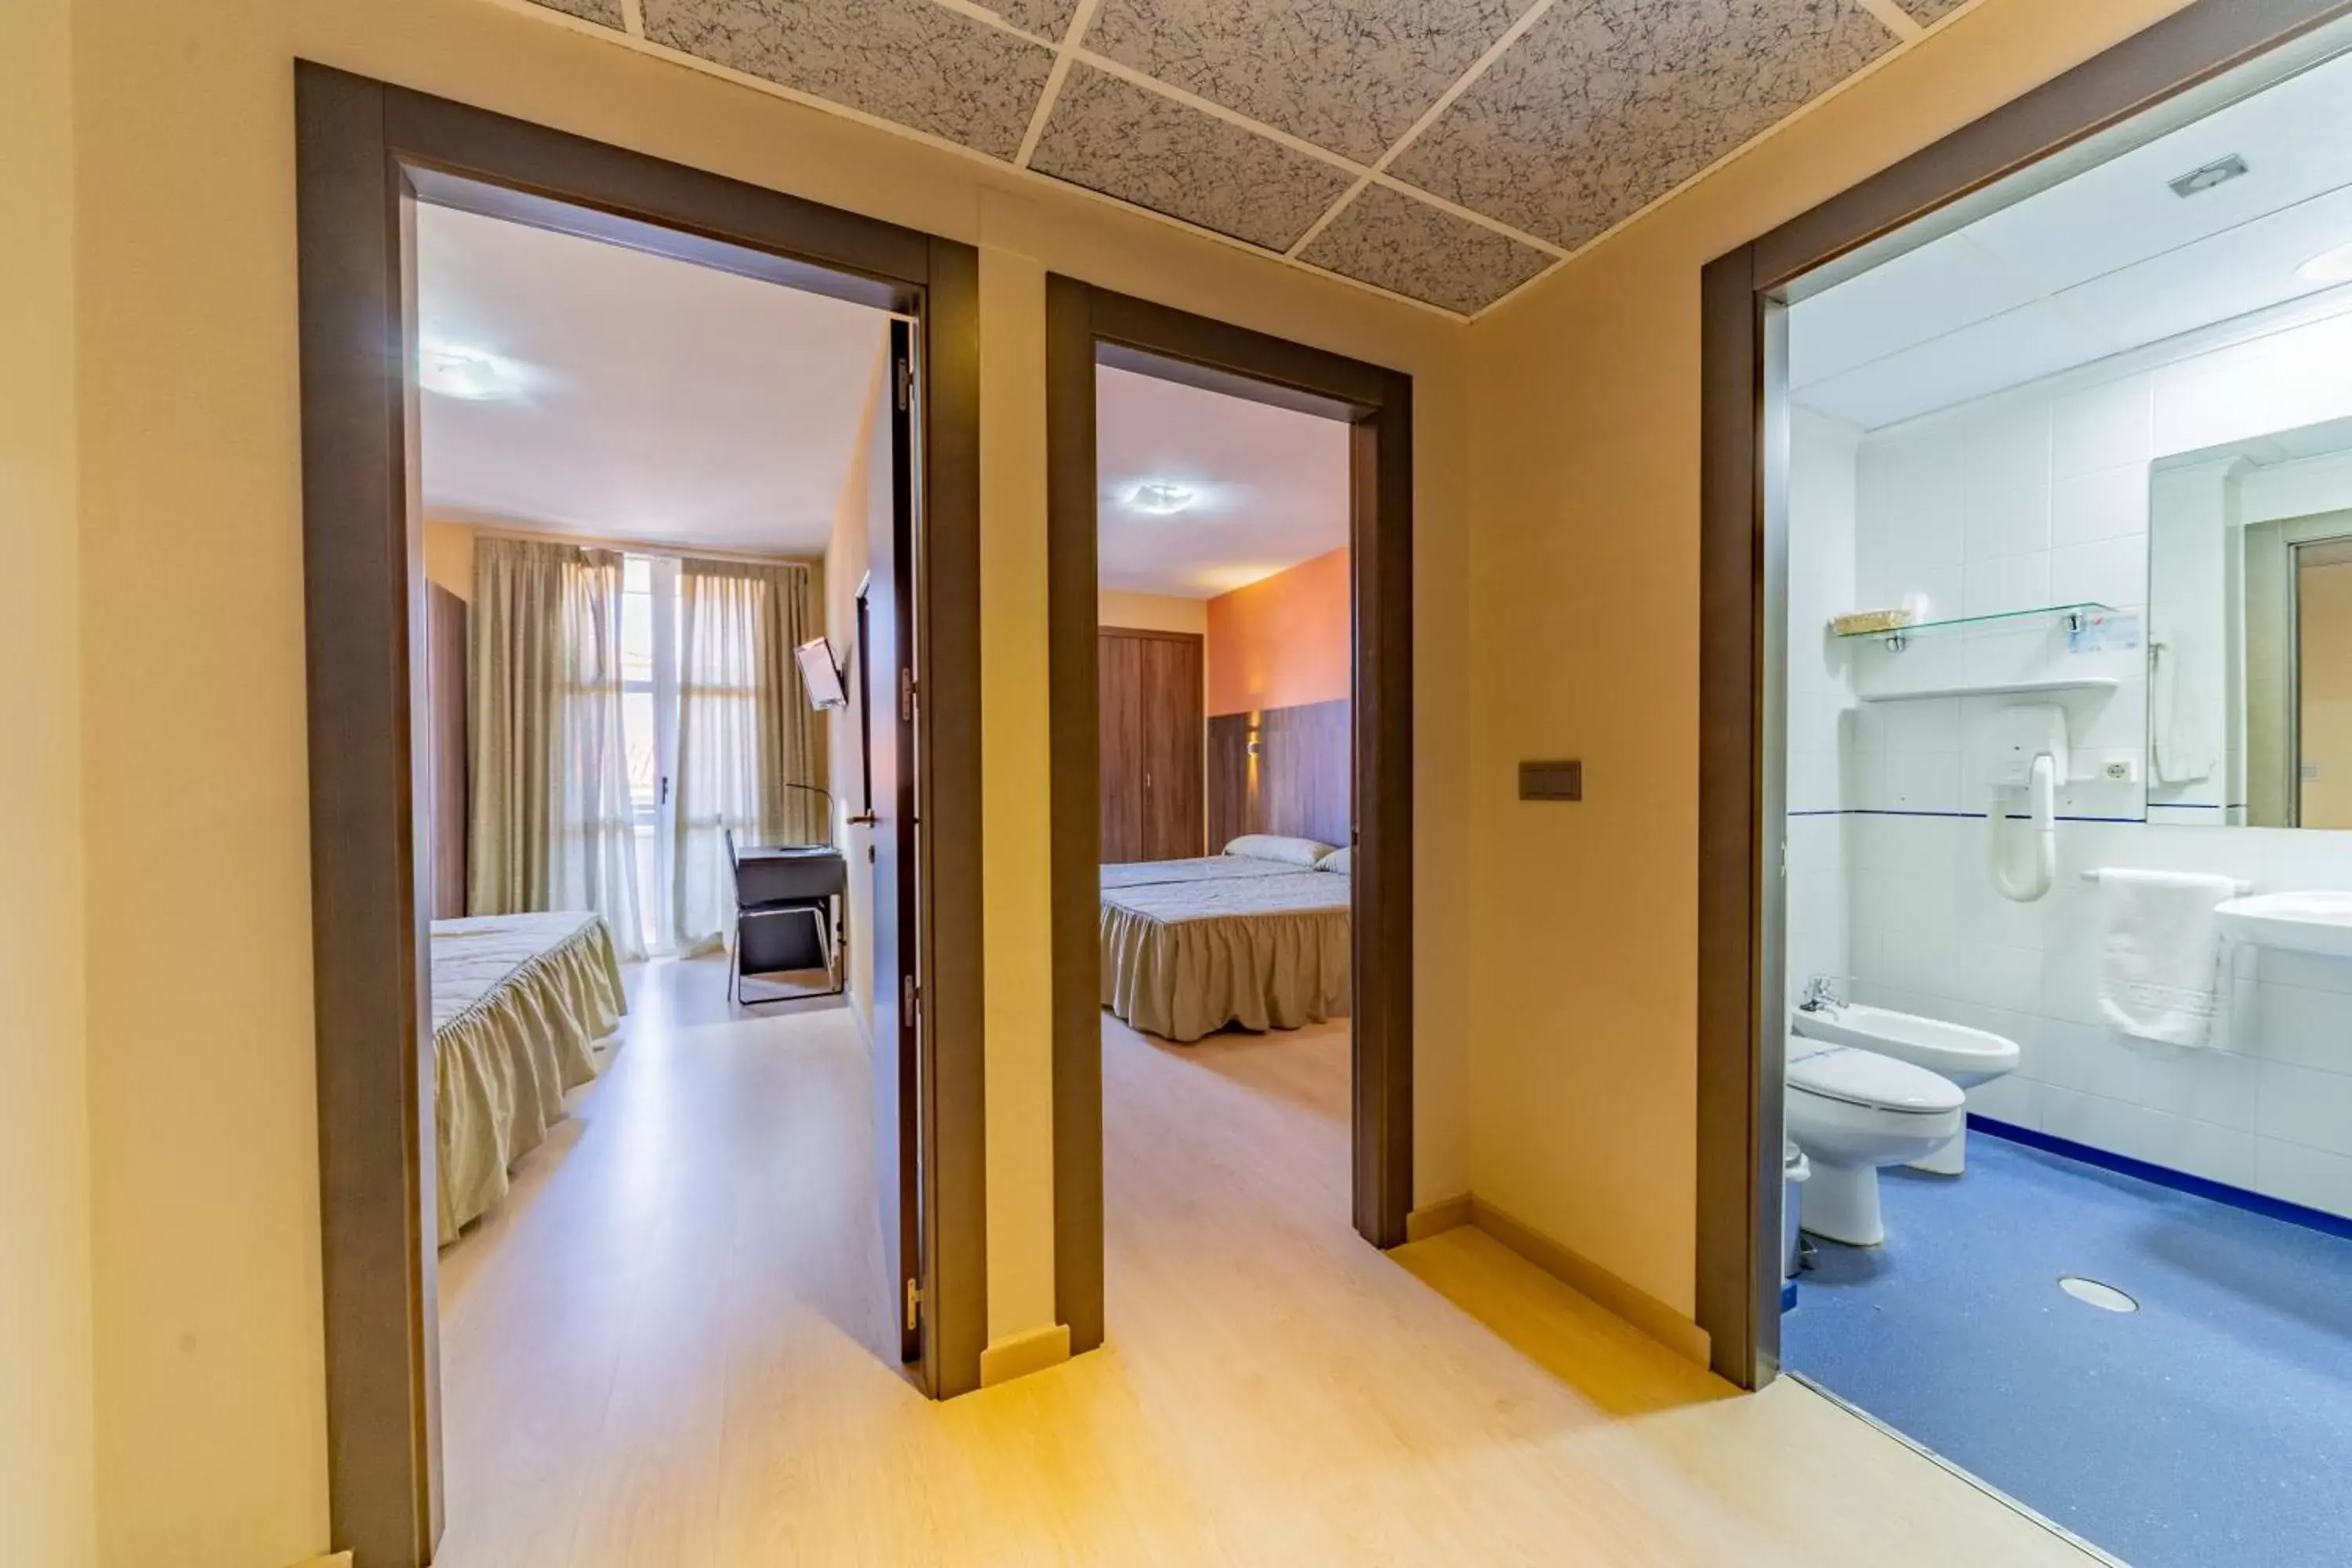 Photo of the whole room, Bathroom in Hotel Monreal Jumilla